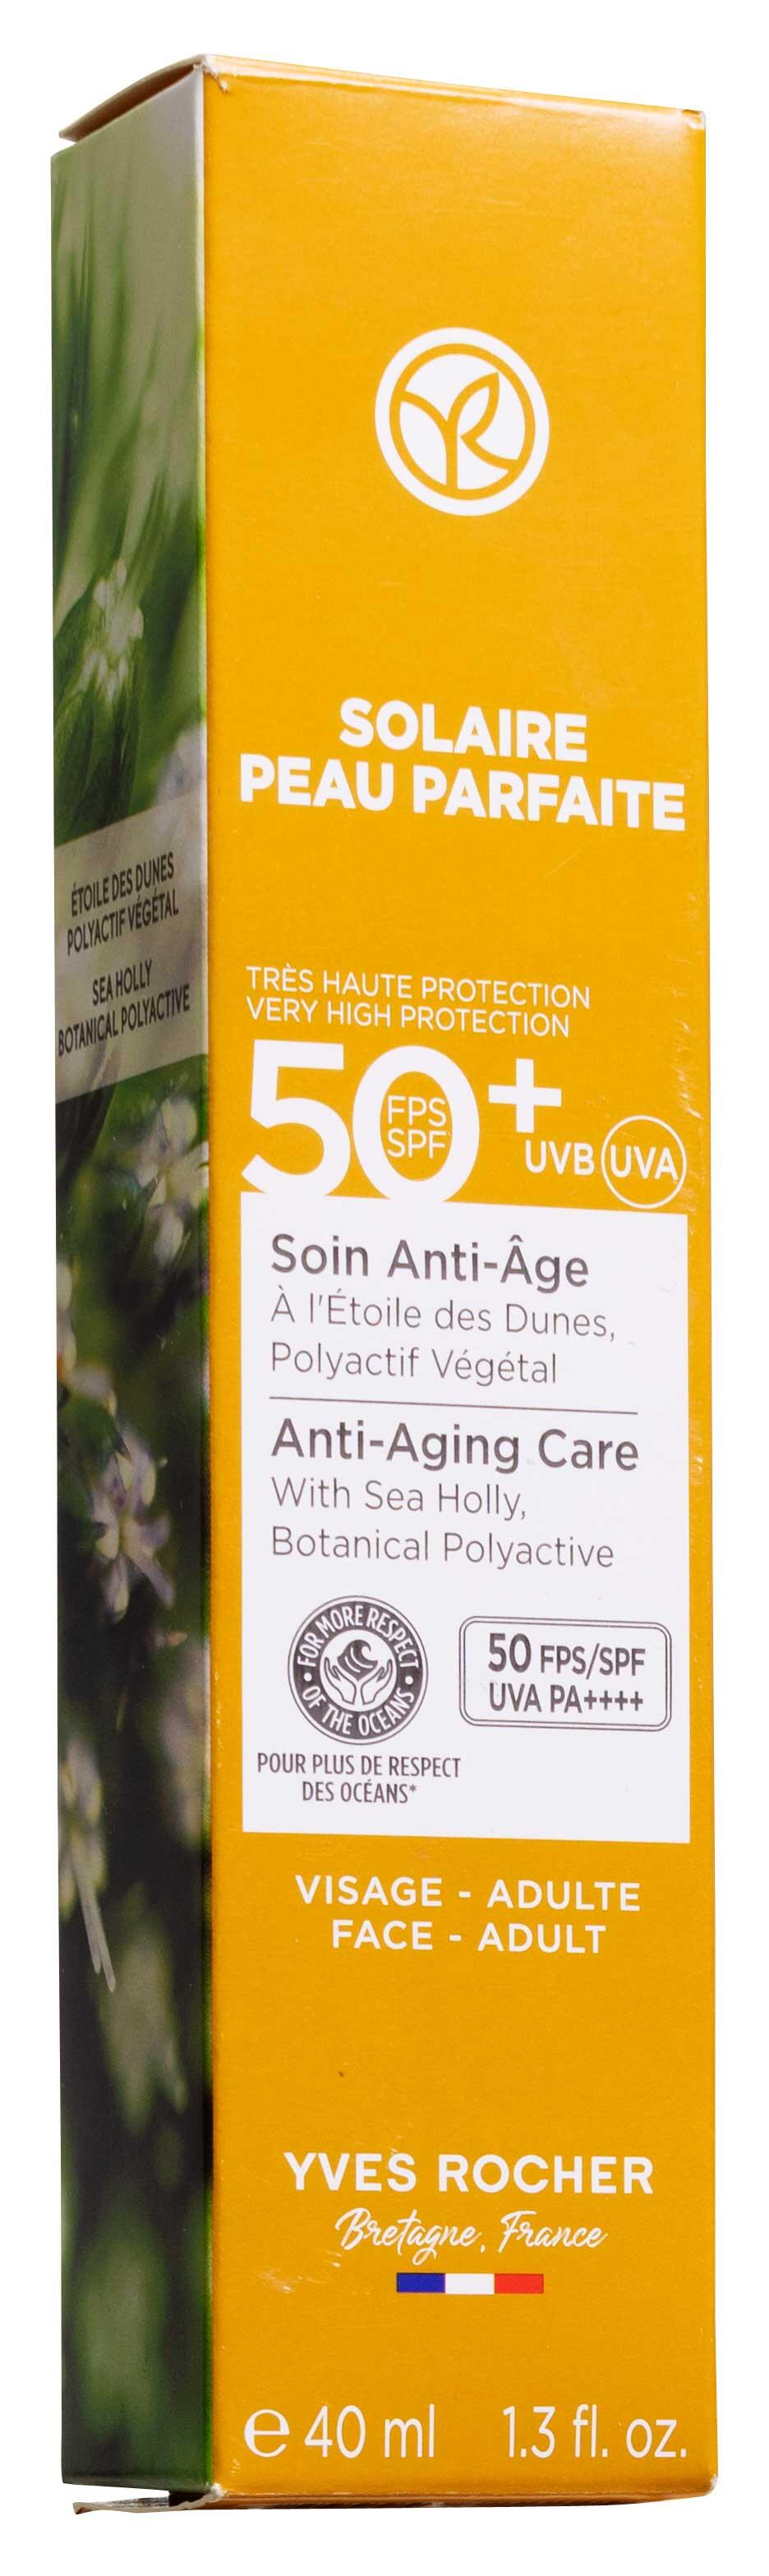 Solaire peau parfaite Anti-aging care SPF 50+ Yves Rocher